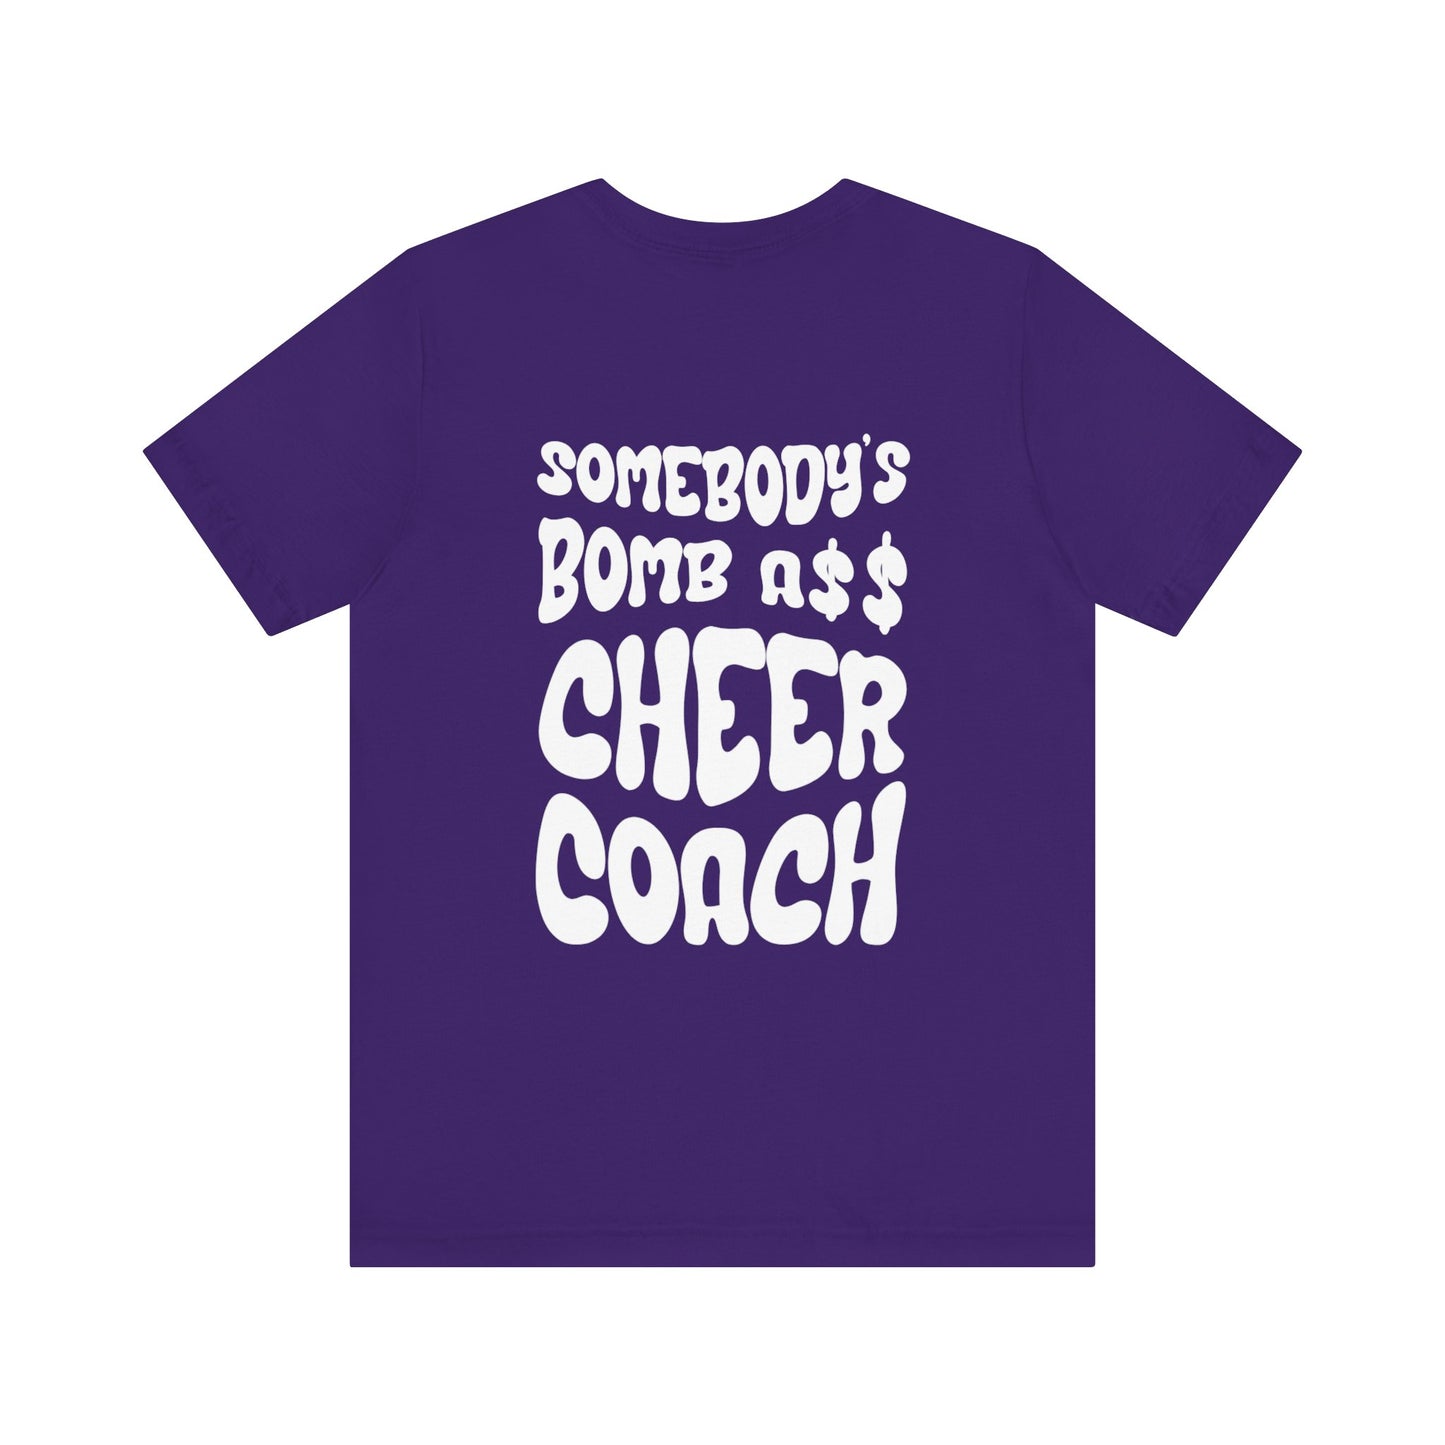 Bomb A$$ Cheer Coach Tee